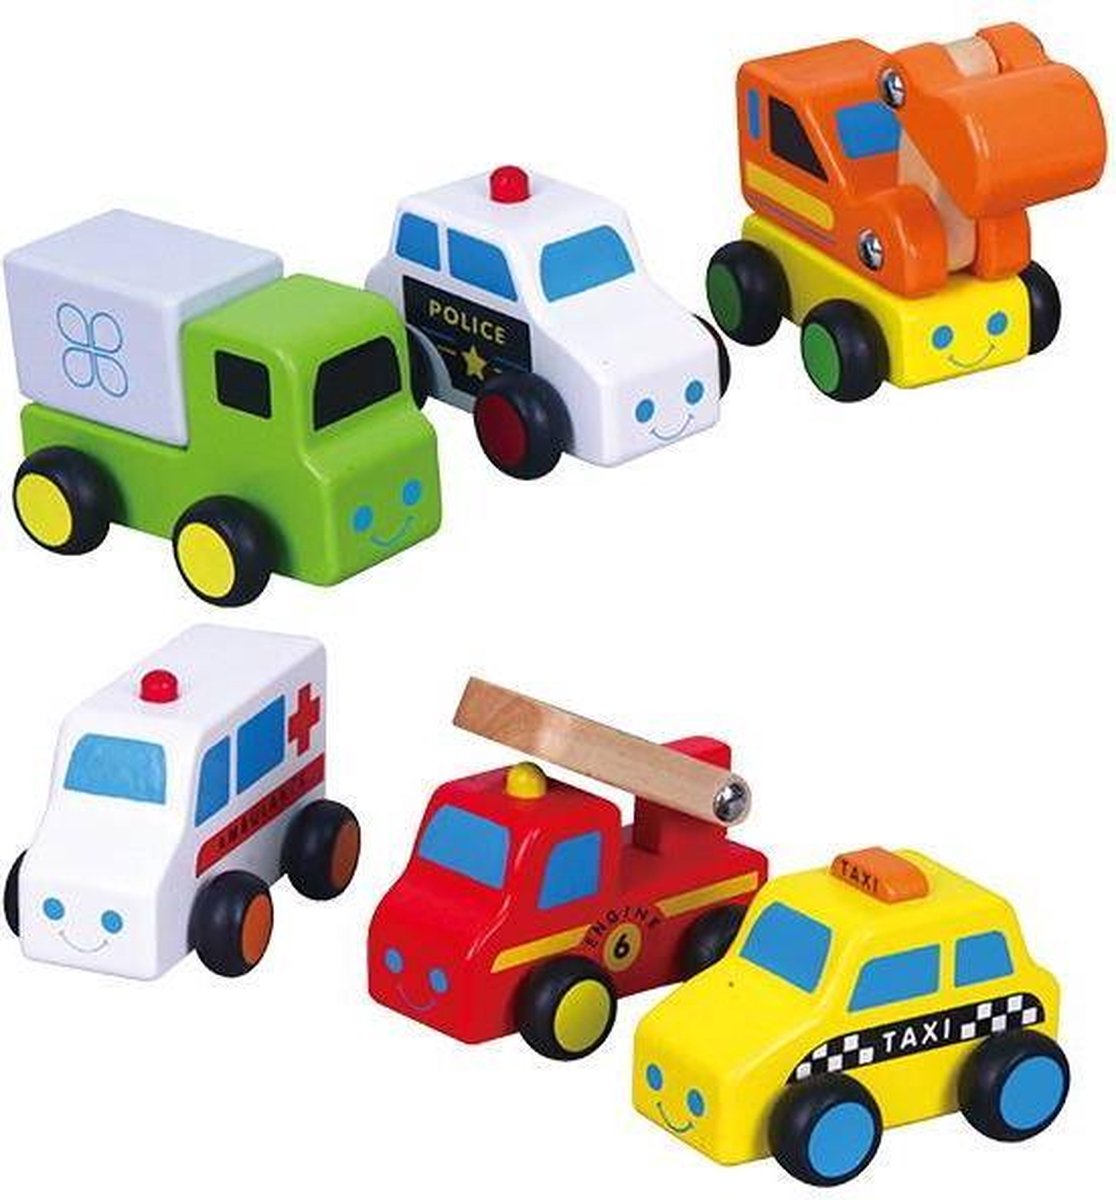 Viga Toys voertuigen hout 5 cm 6 stuks multicolor